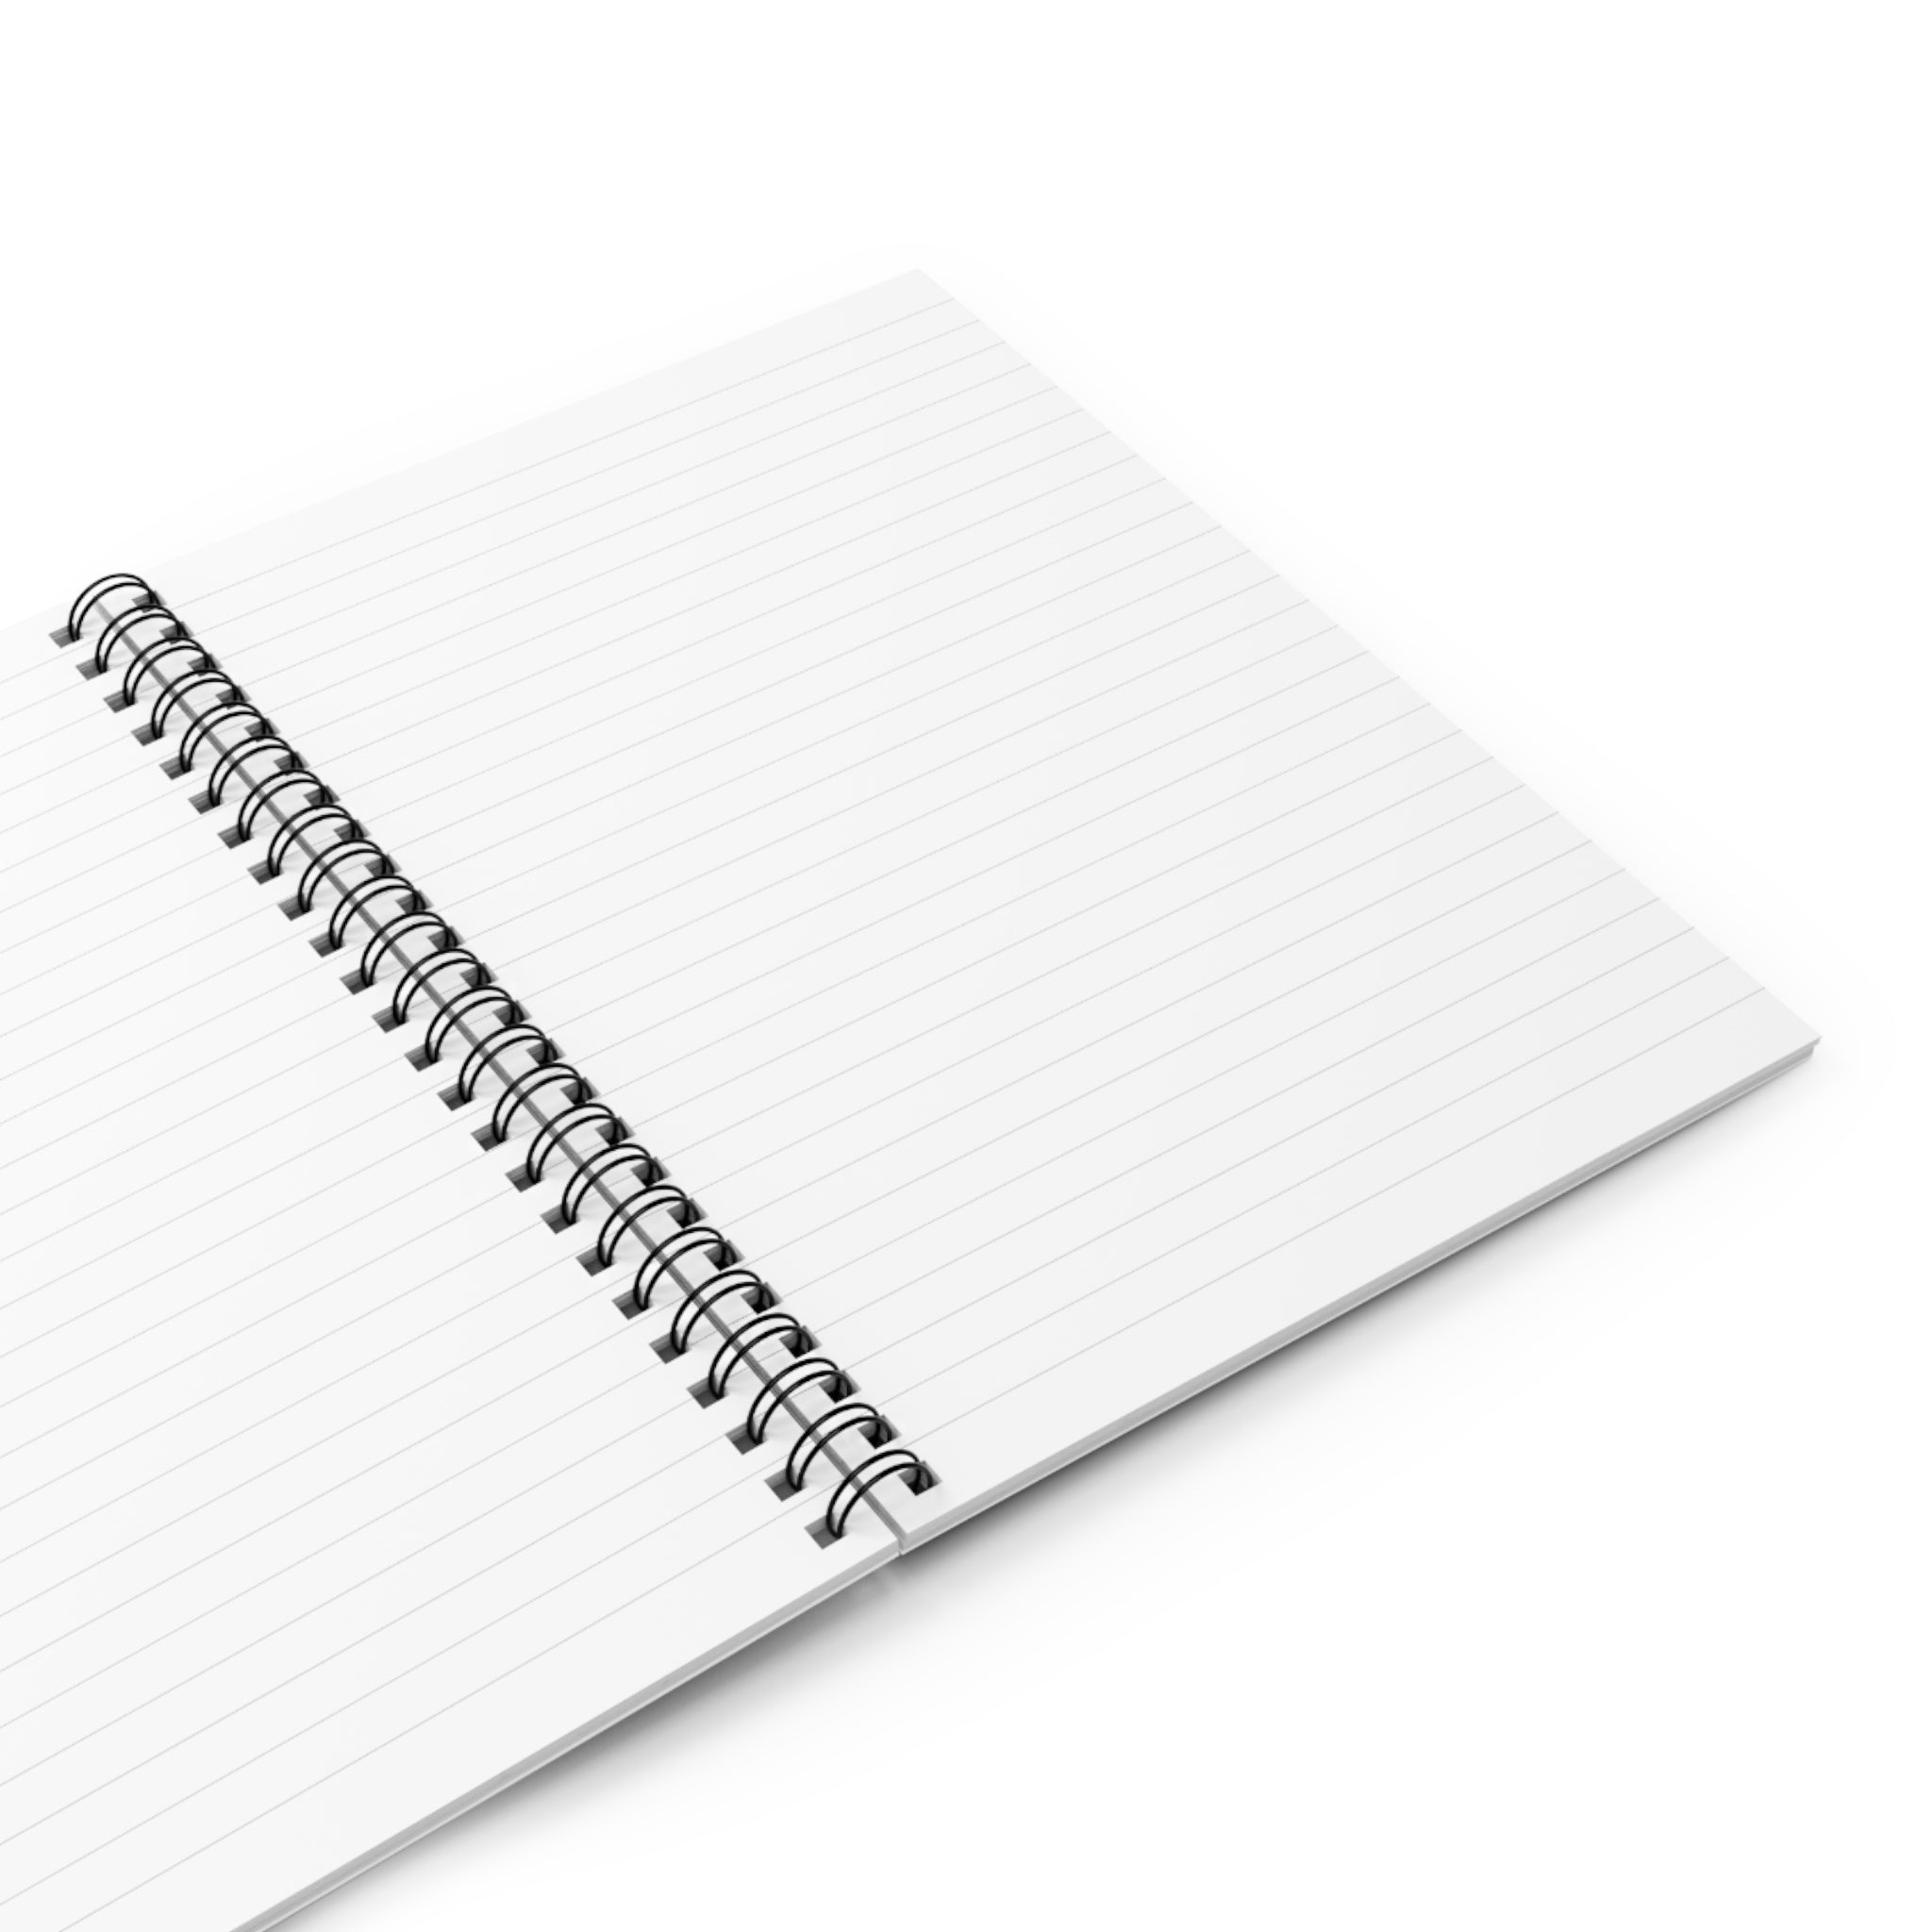 Keep Calm Spiral Notebook (white)